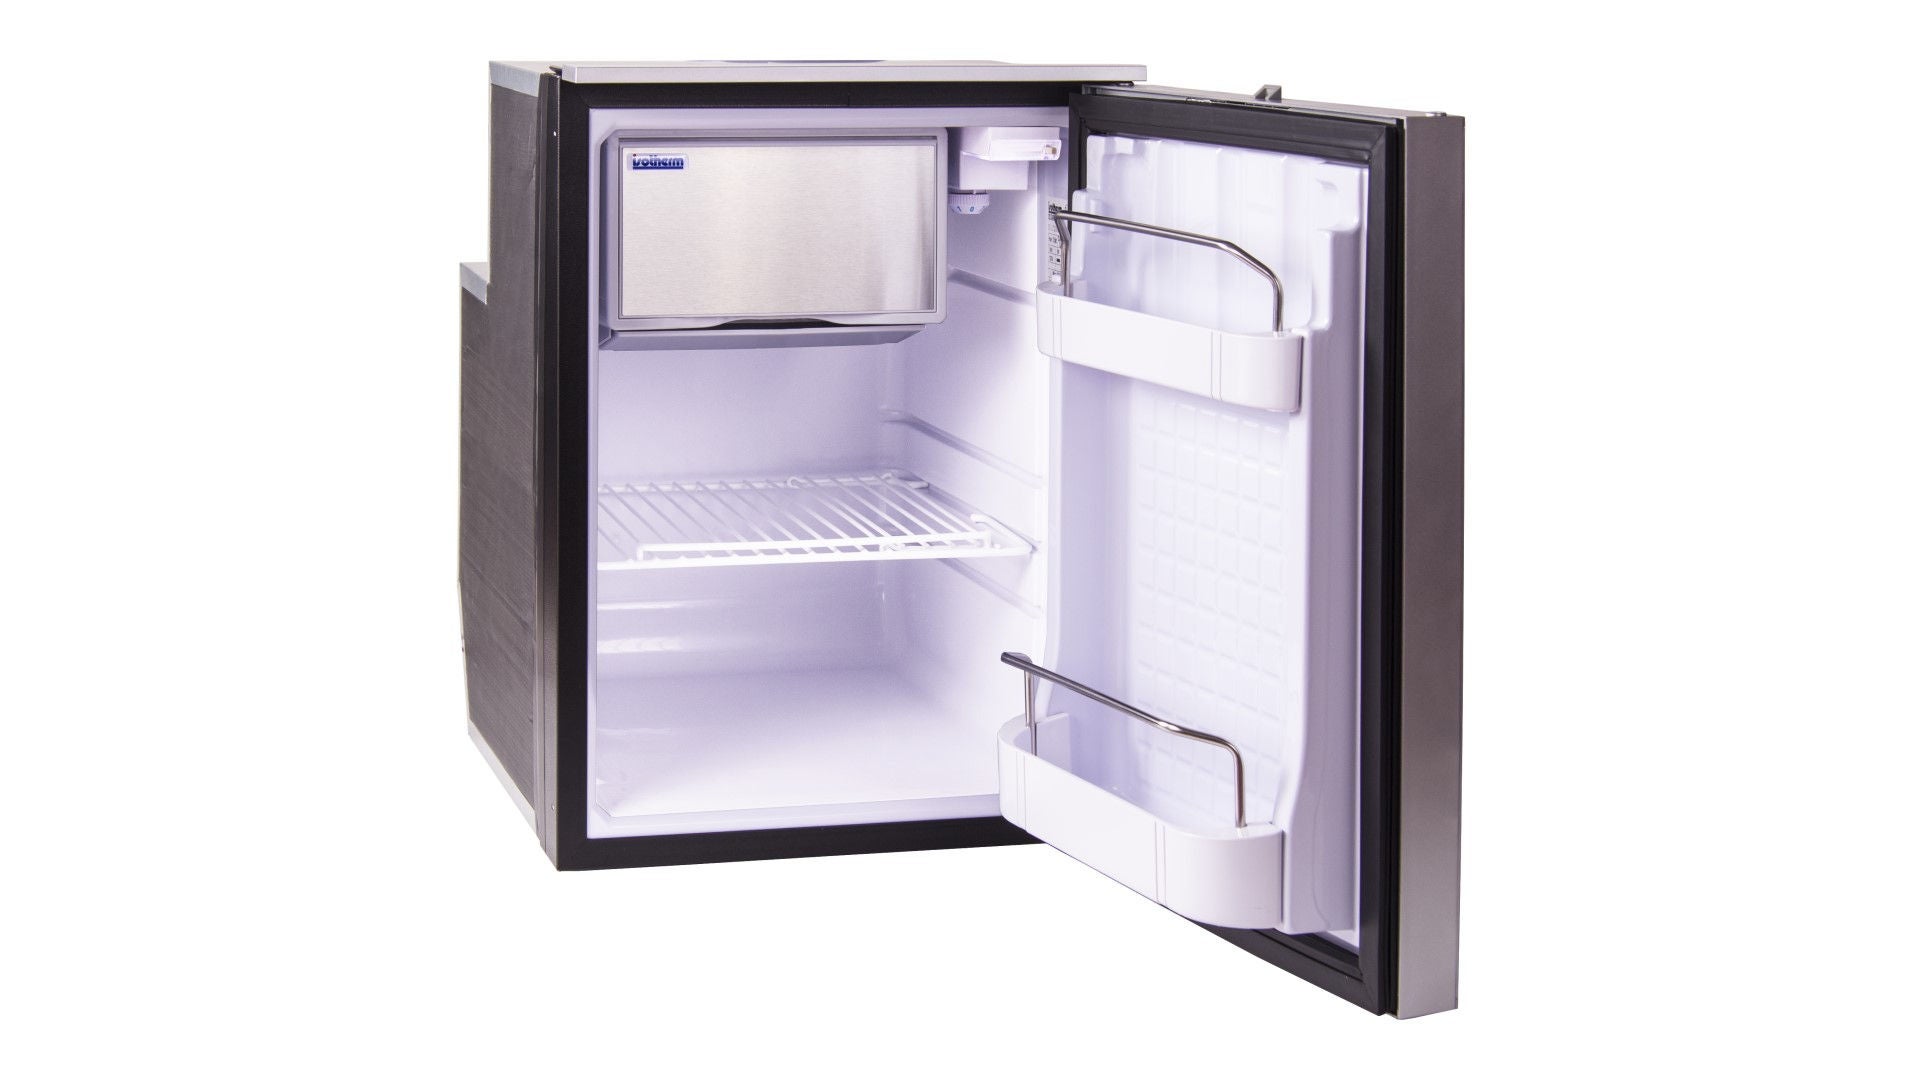 Product picture of Cruise Elegance 49 fridge with open door